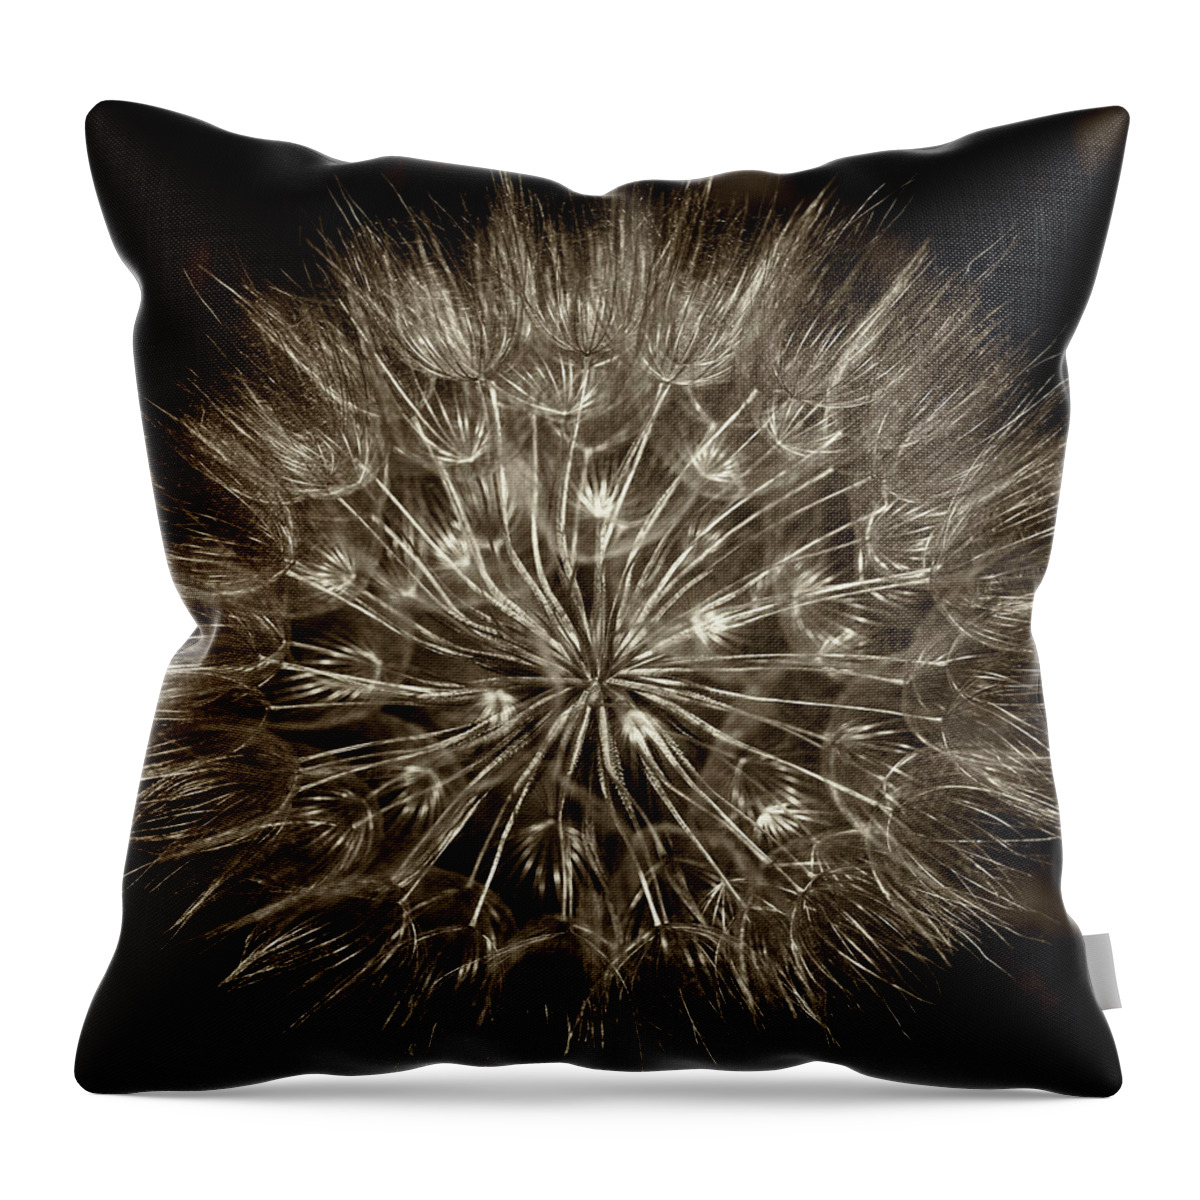 Seed Pod Throw Pillow featuring the photograph Luminous by Elvira Butler